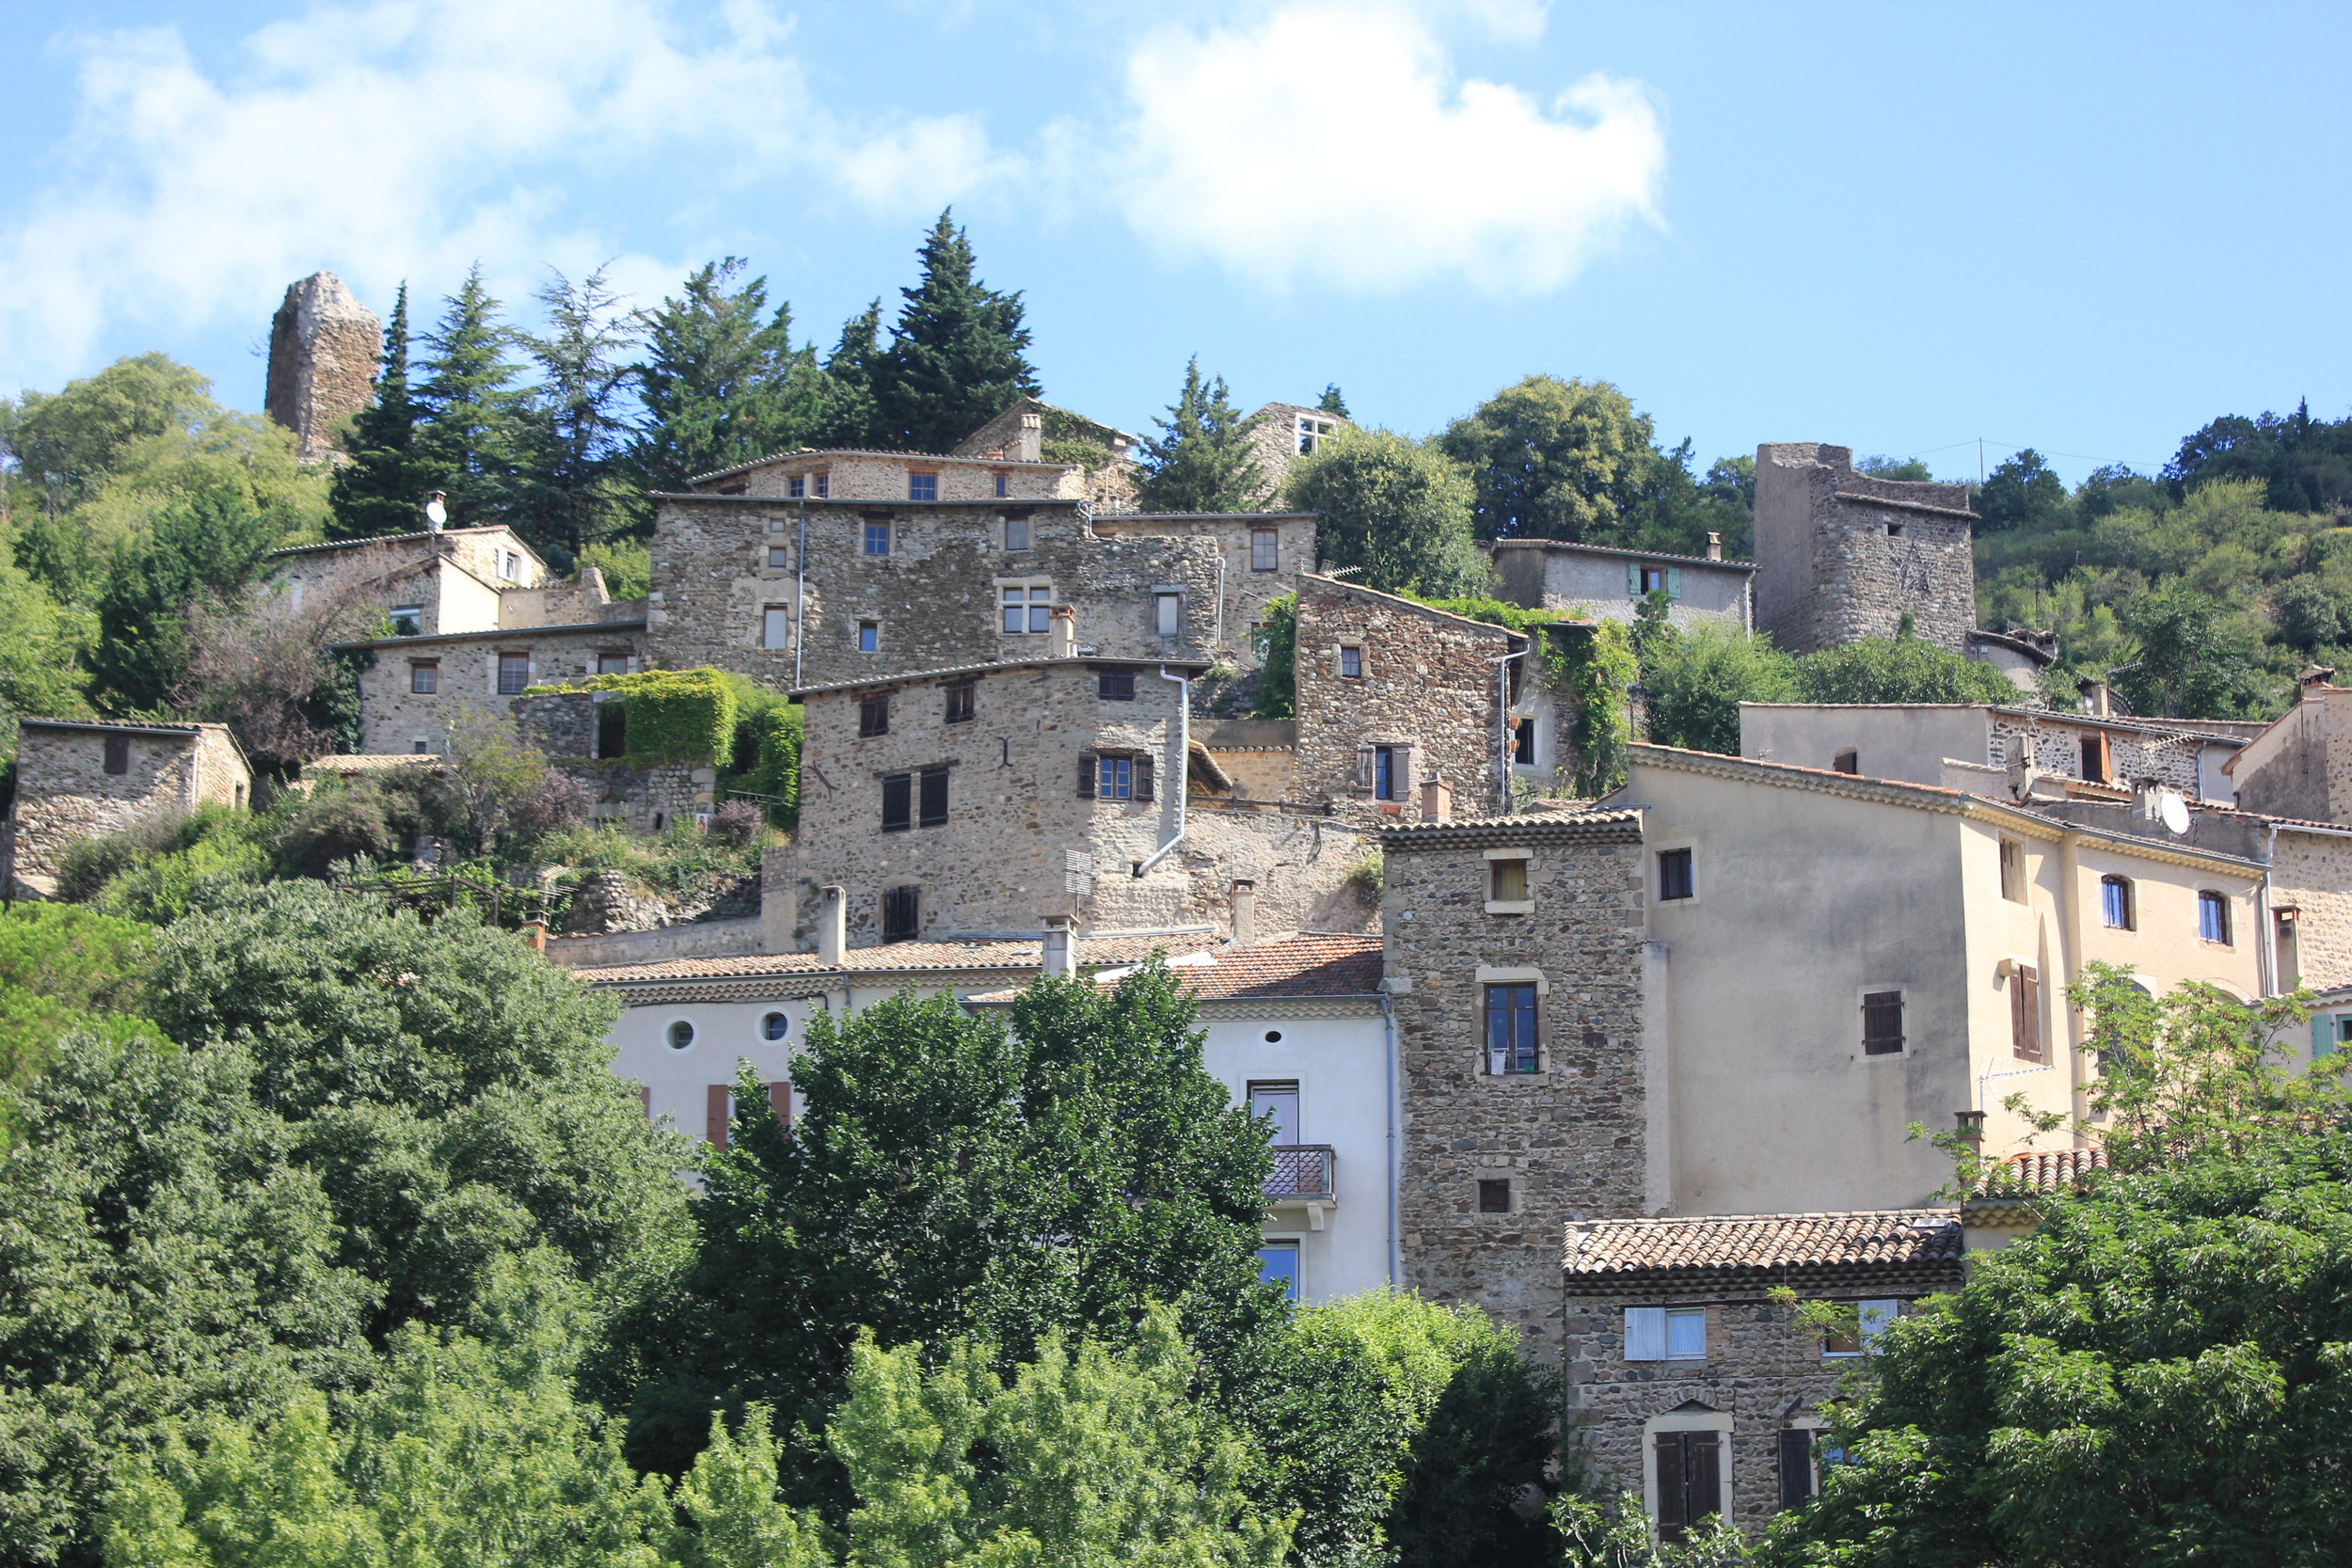 The Medieval village of Beauchastel